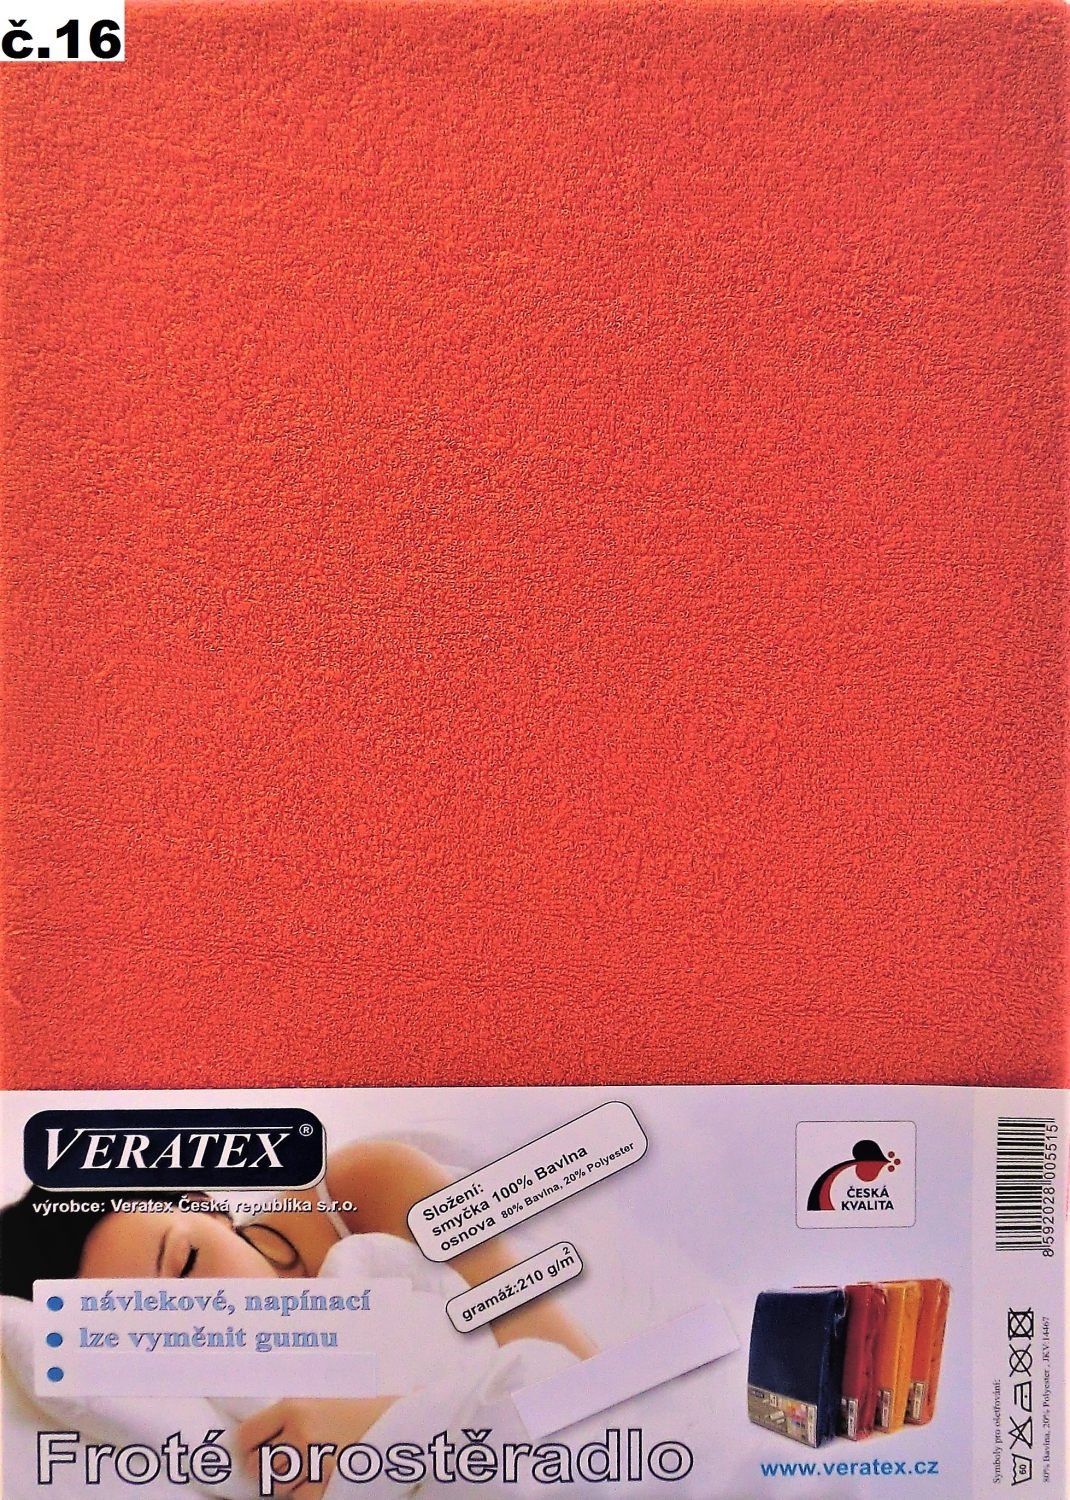 Veratex Froté prostěradlo 80 x 160 cm (č.16 malina) 80 x 160 cm